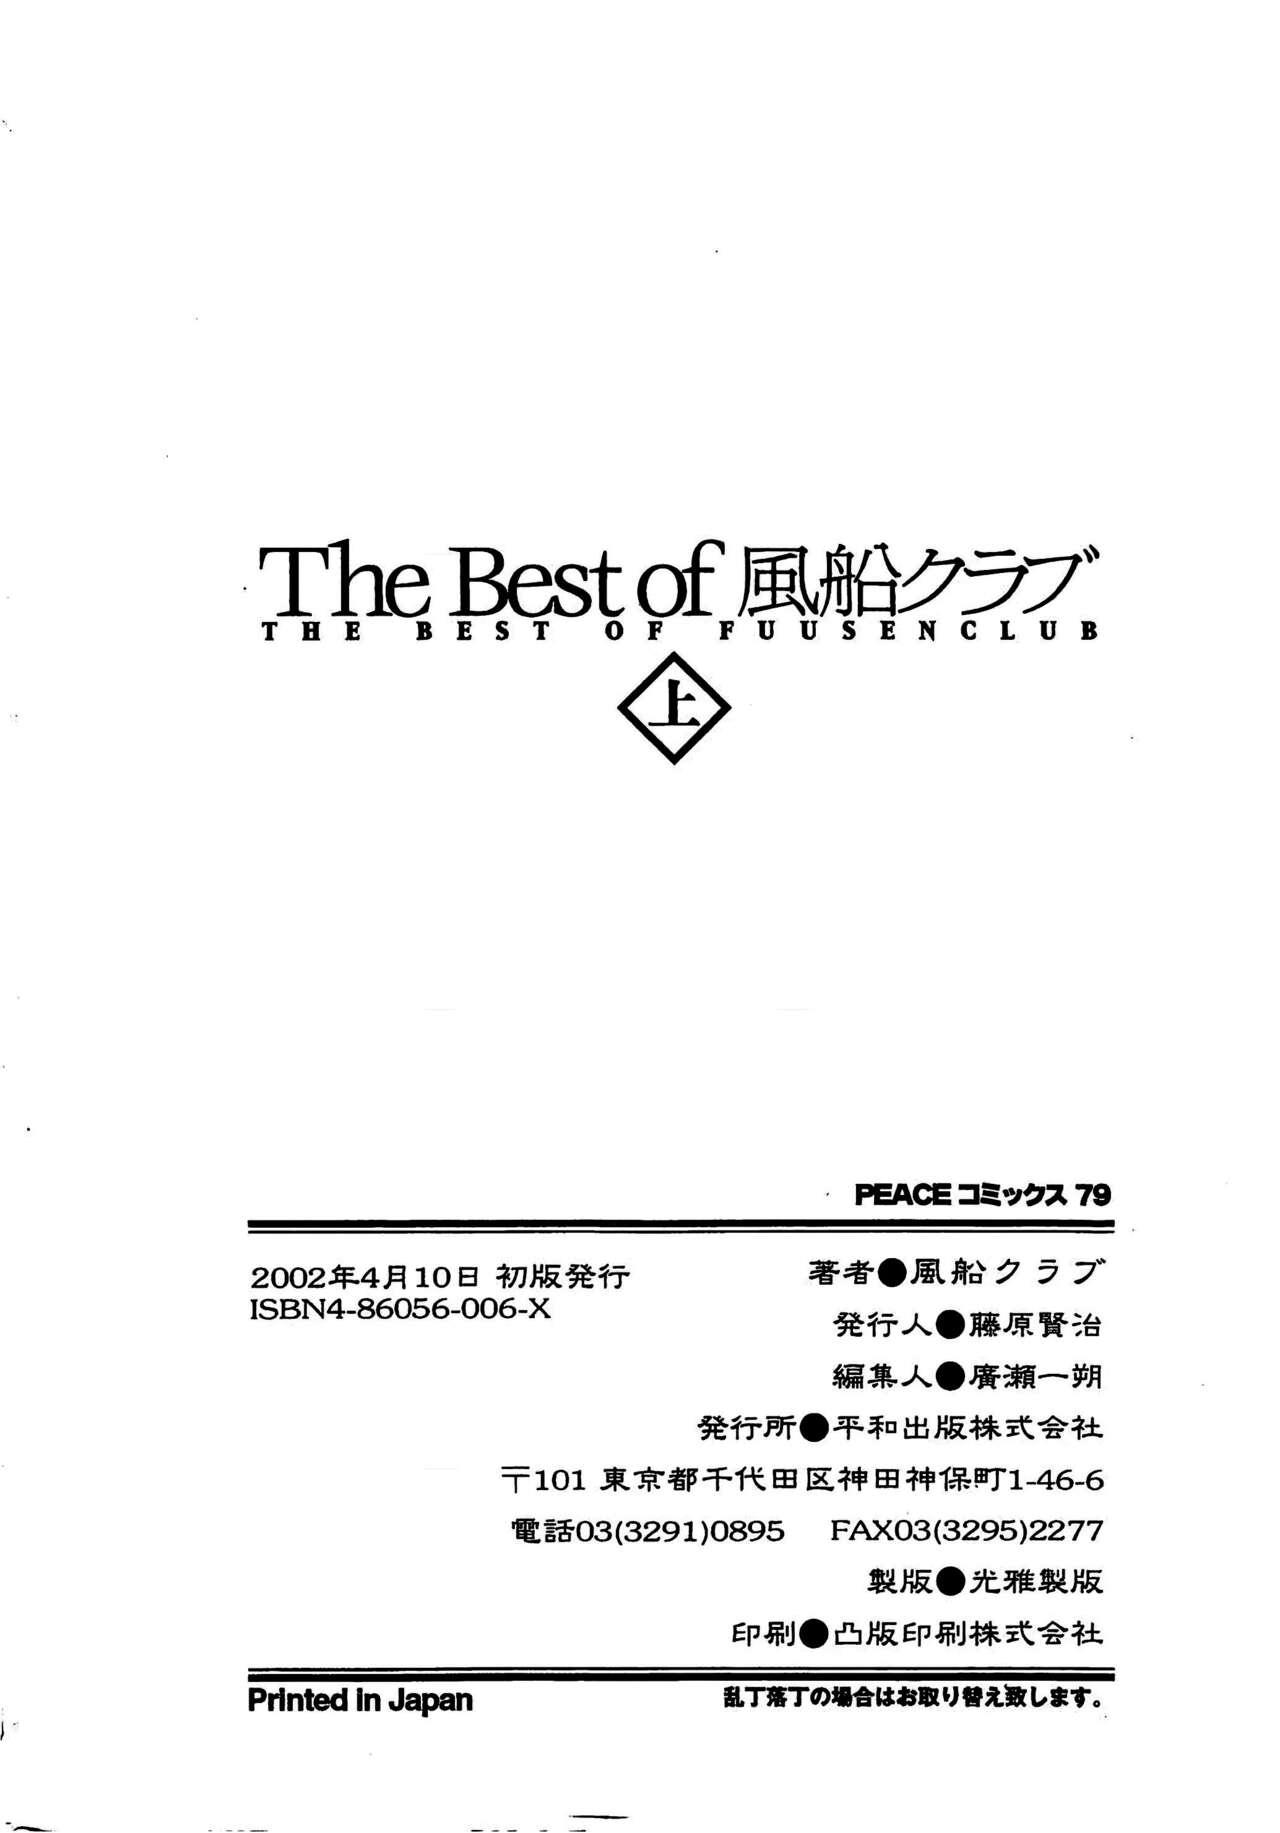 The Best of Fuusen Club Vol.1 195